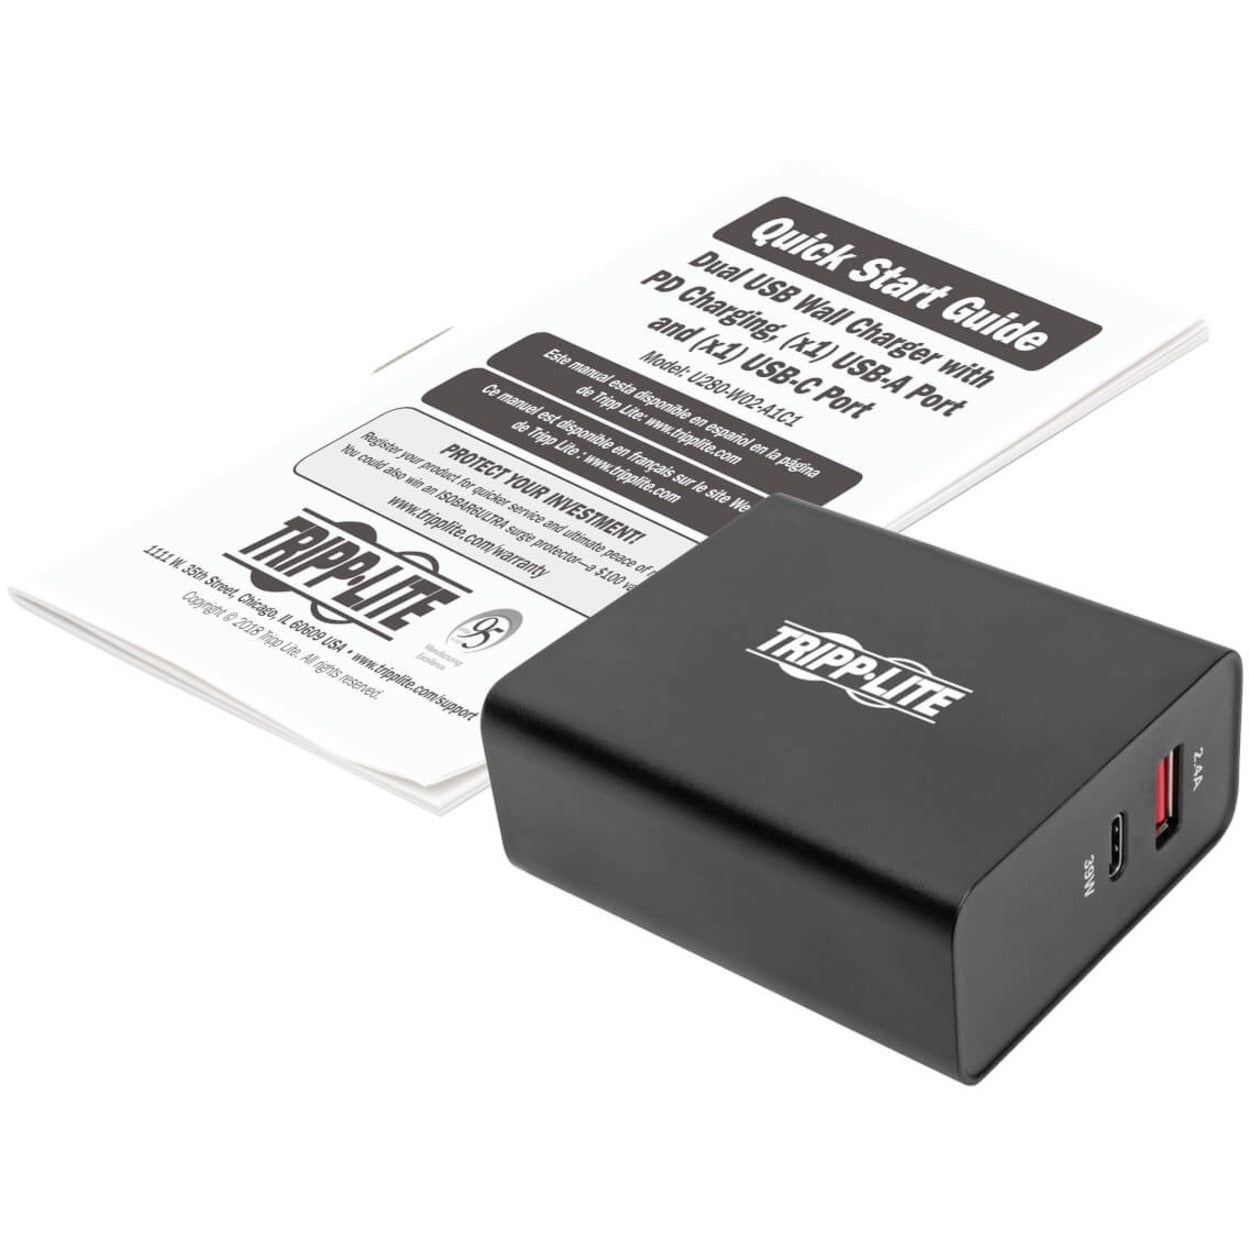 Tripp Lite - トリップライト U280-W02-A1C1 ACアダプター、2PT USBウォールチャージャー、USBタイプC、51W電力、2年保証